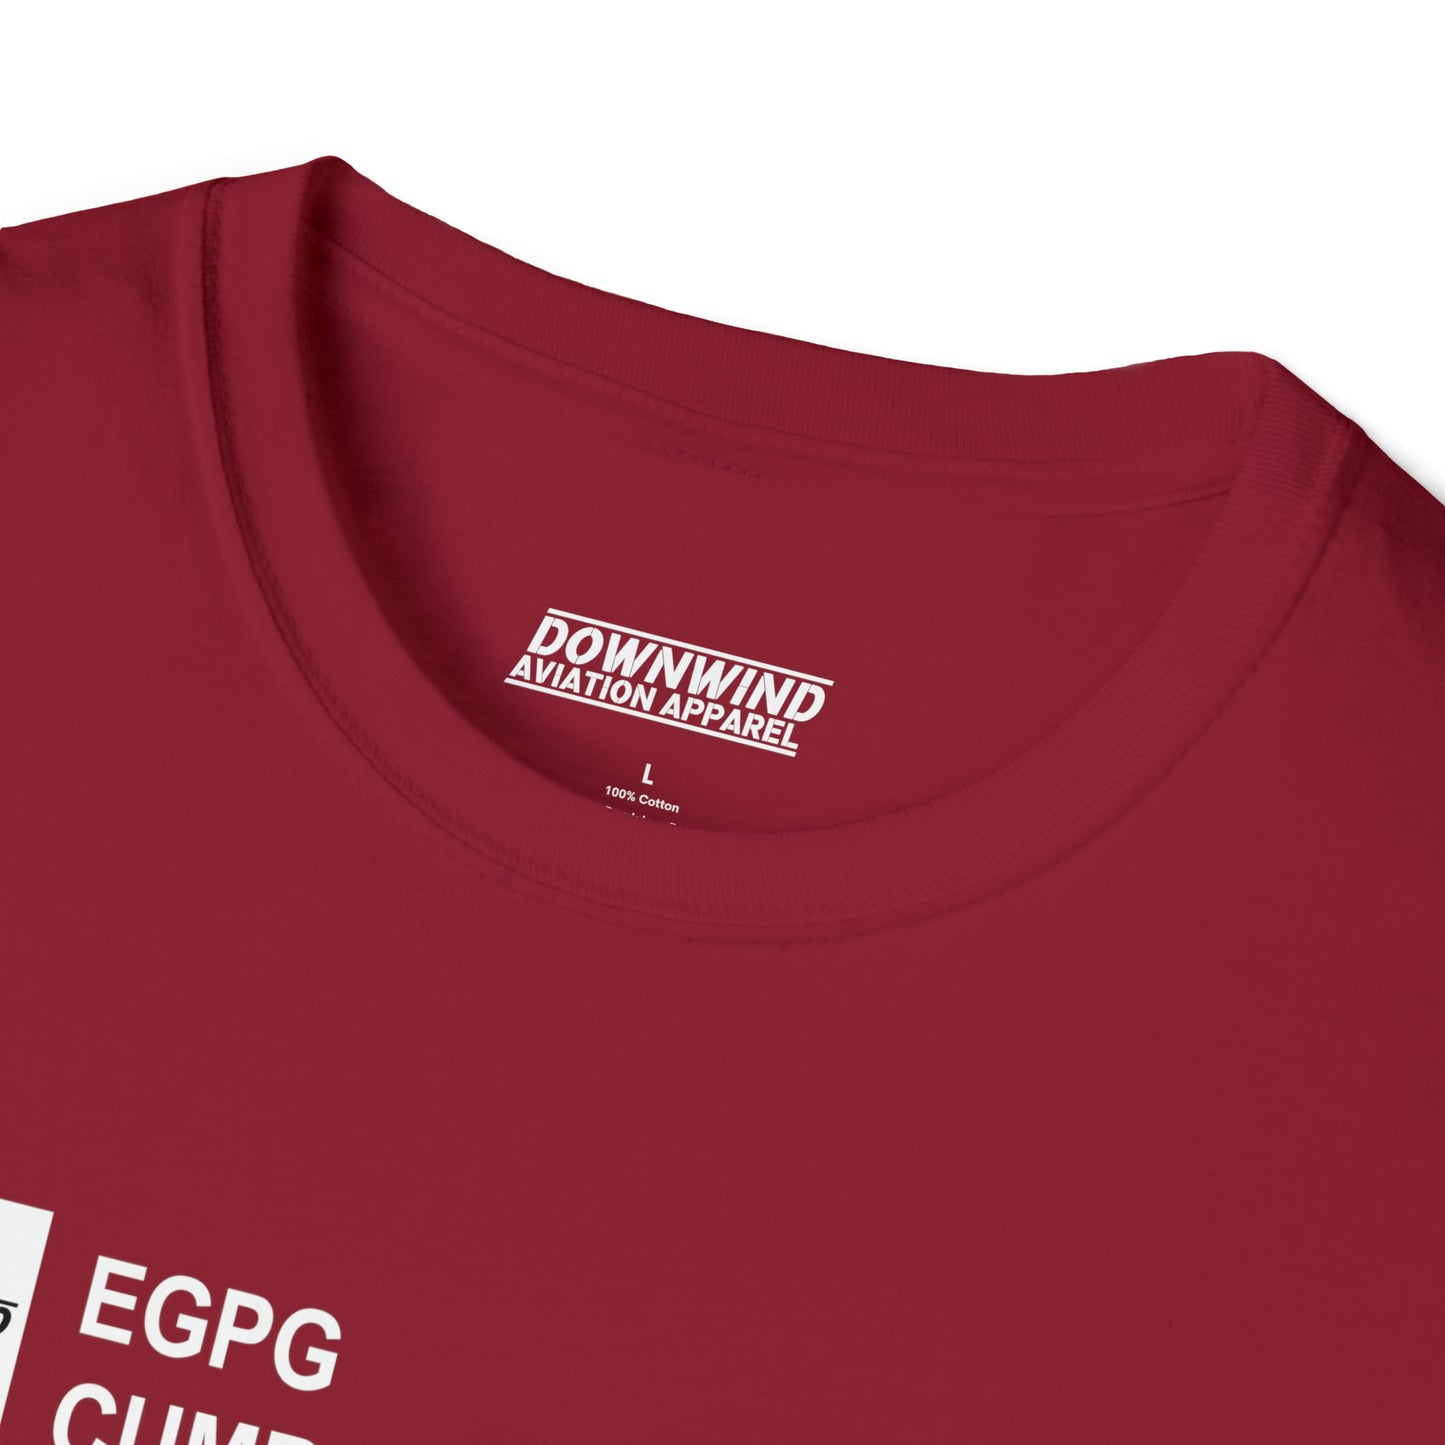 EGPG / Cumbernauld Airport T-Shirt